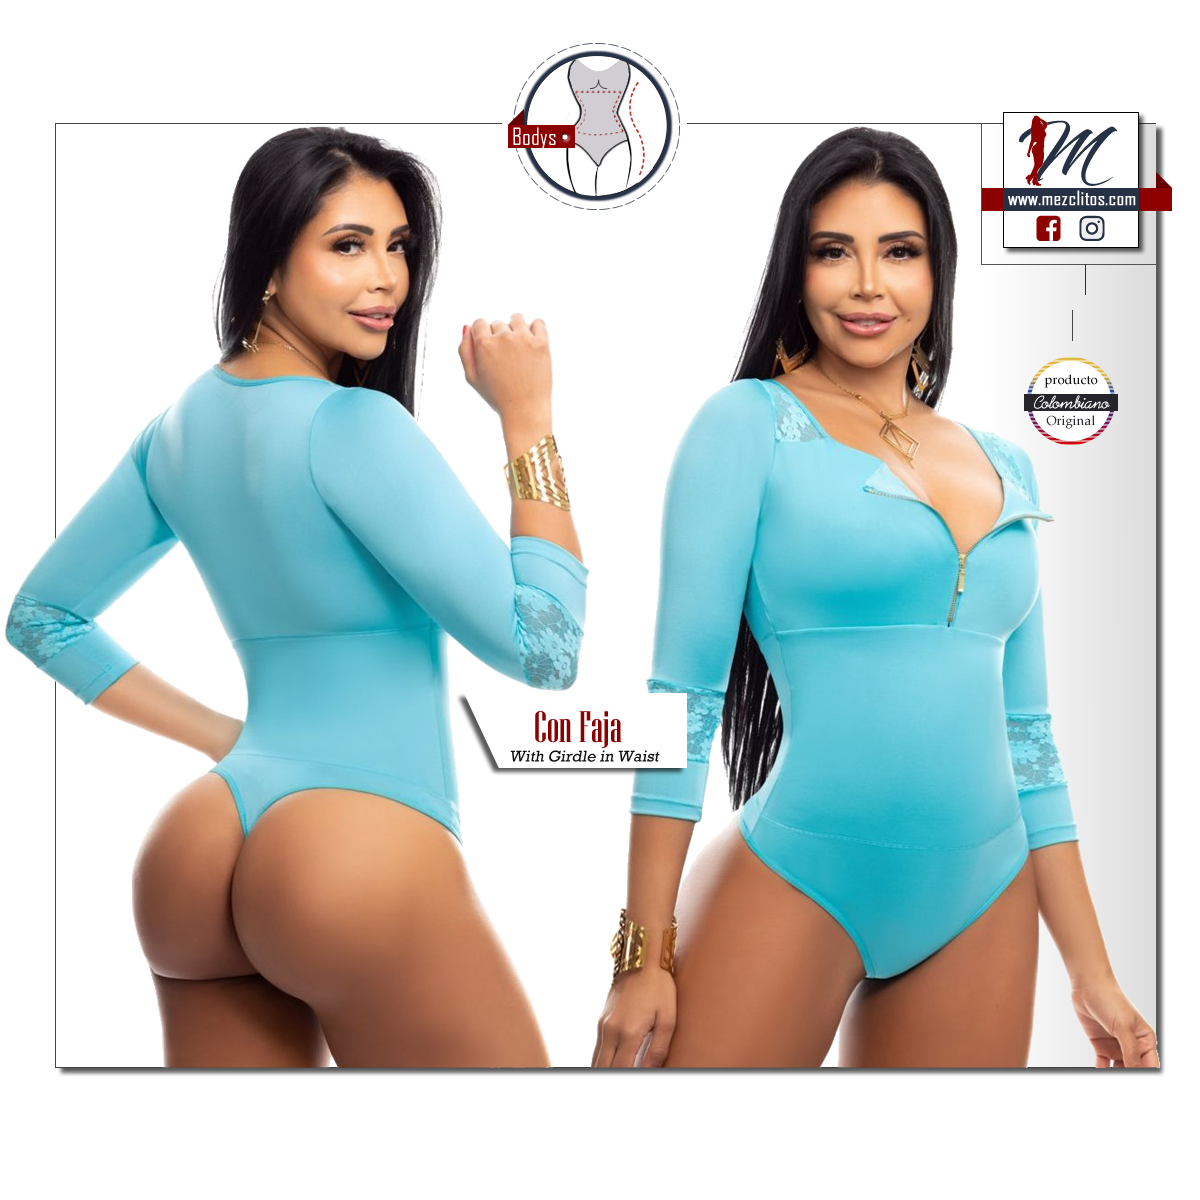 Bodysuits Reductoras 3423 (w/ faja) Teal - 100% Colombiano